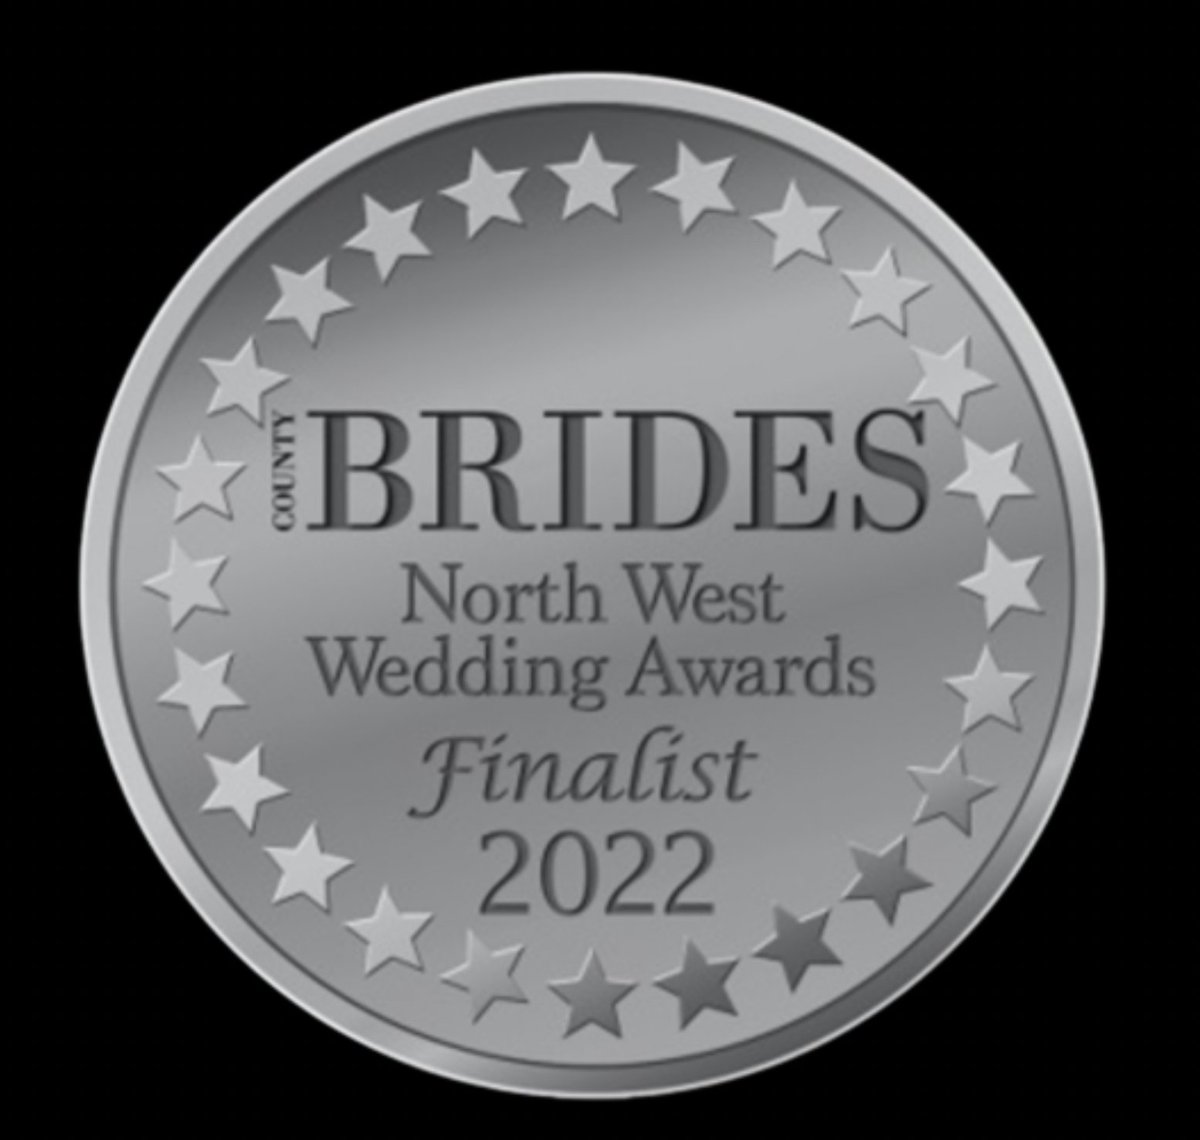 @UlletRoadChurch recently had the honour of attending a prestigious Wedding Awards Ceremony...
Many thanks to @CountyBridesltd 🙏

Read more here: mdma.org.uk/news/wedding-a…

#weddingseason #liverpoolwedding #ritesofpassage #InclusiveWeddings #weddingvenue